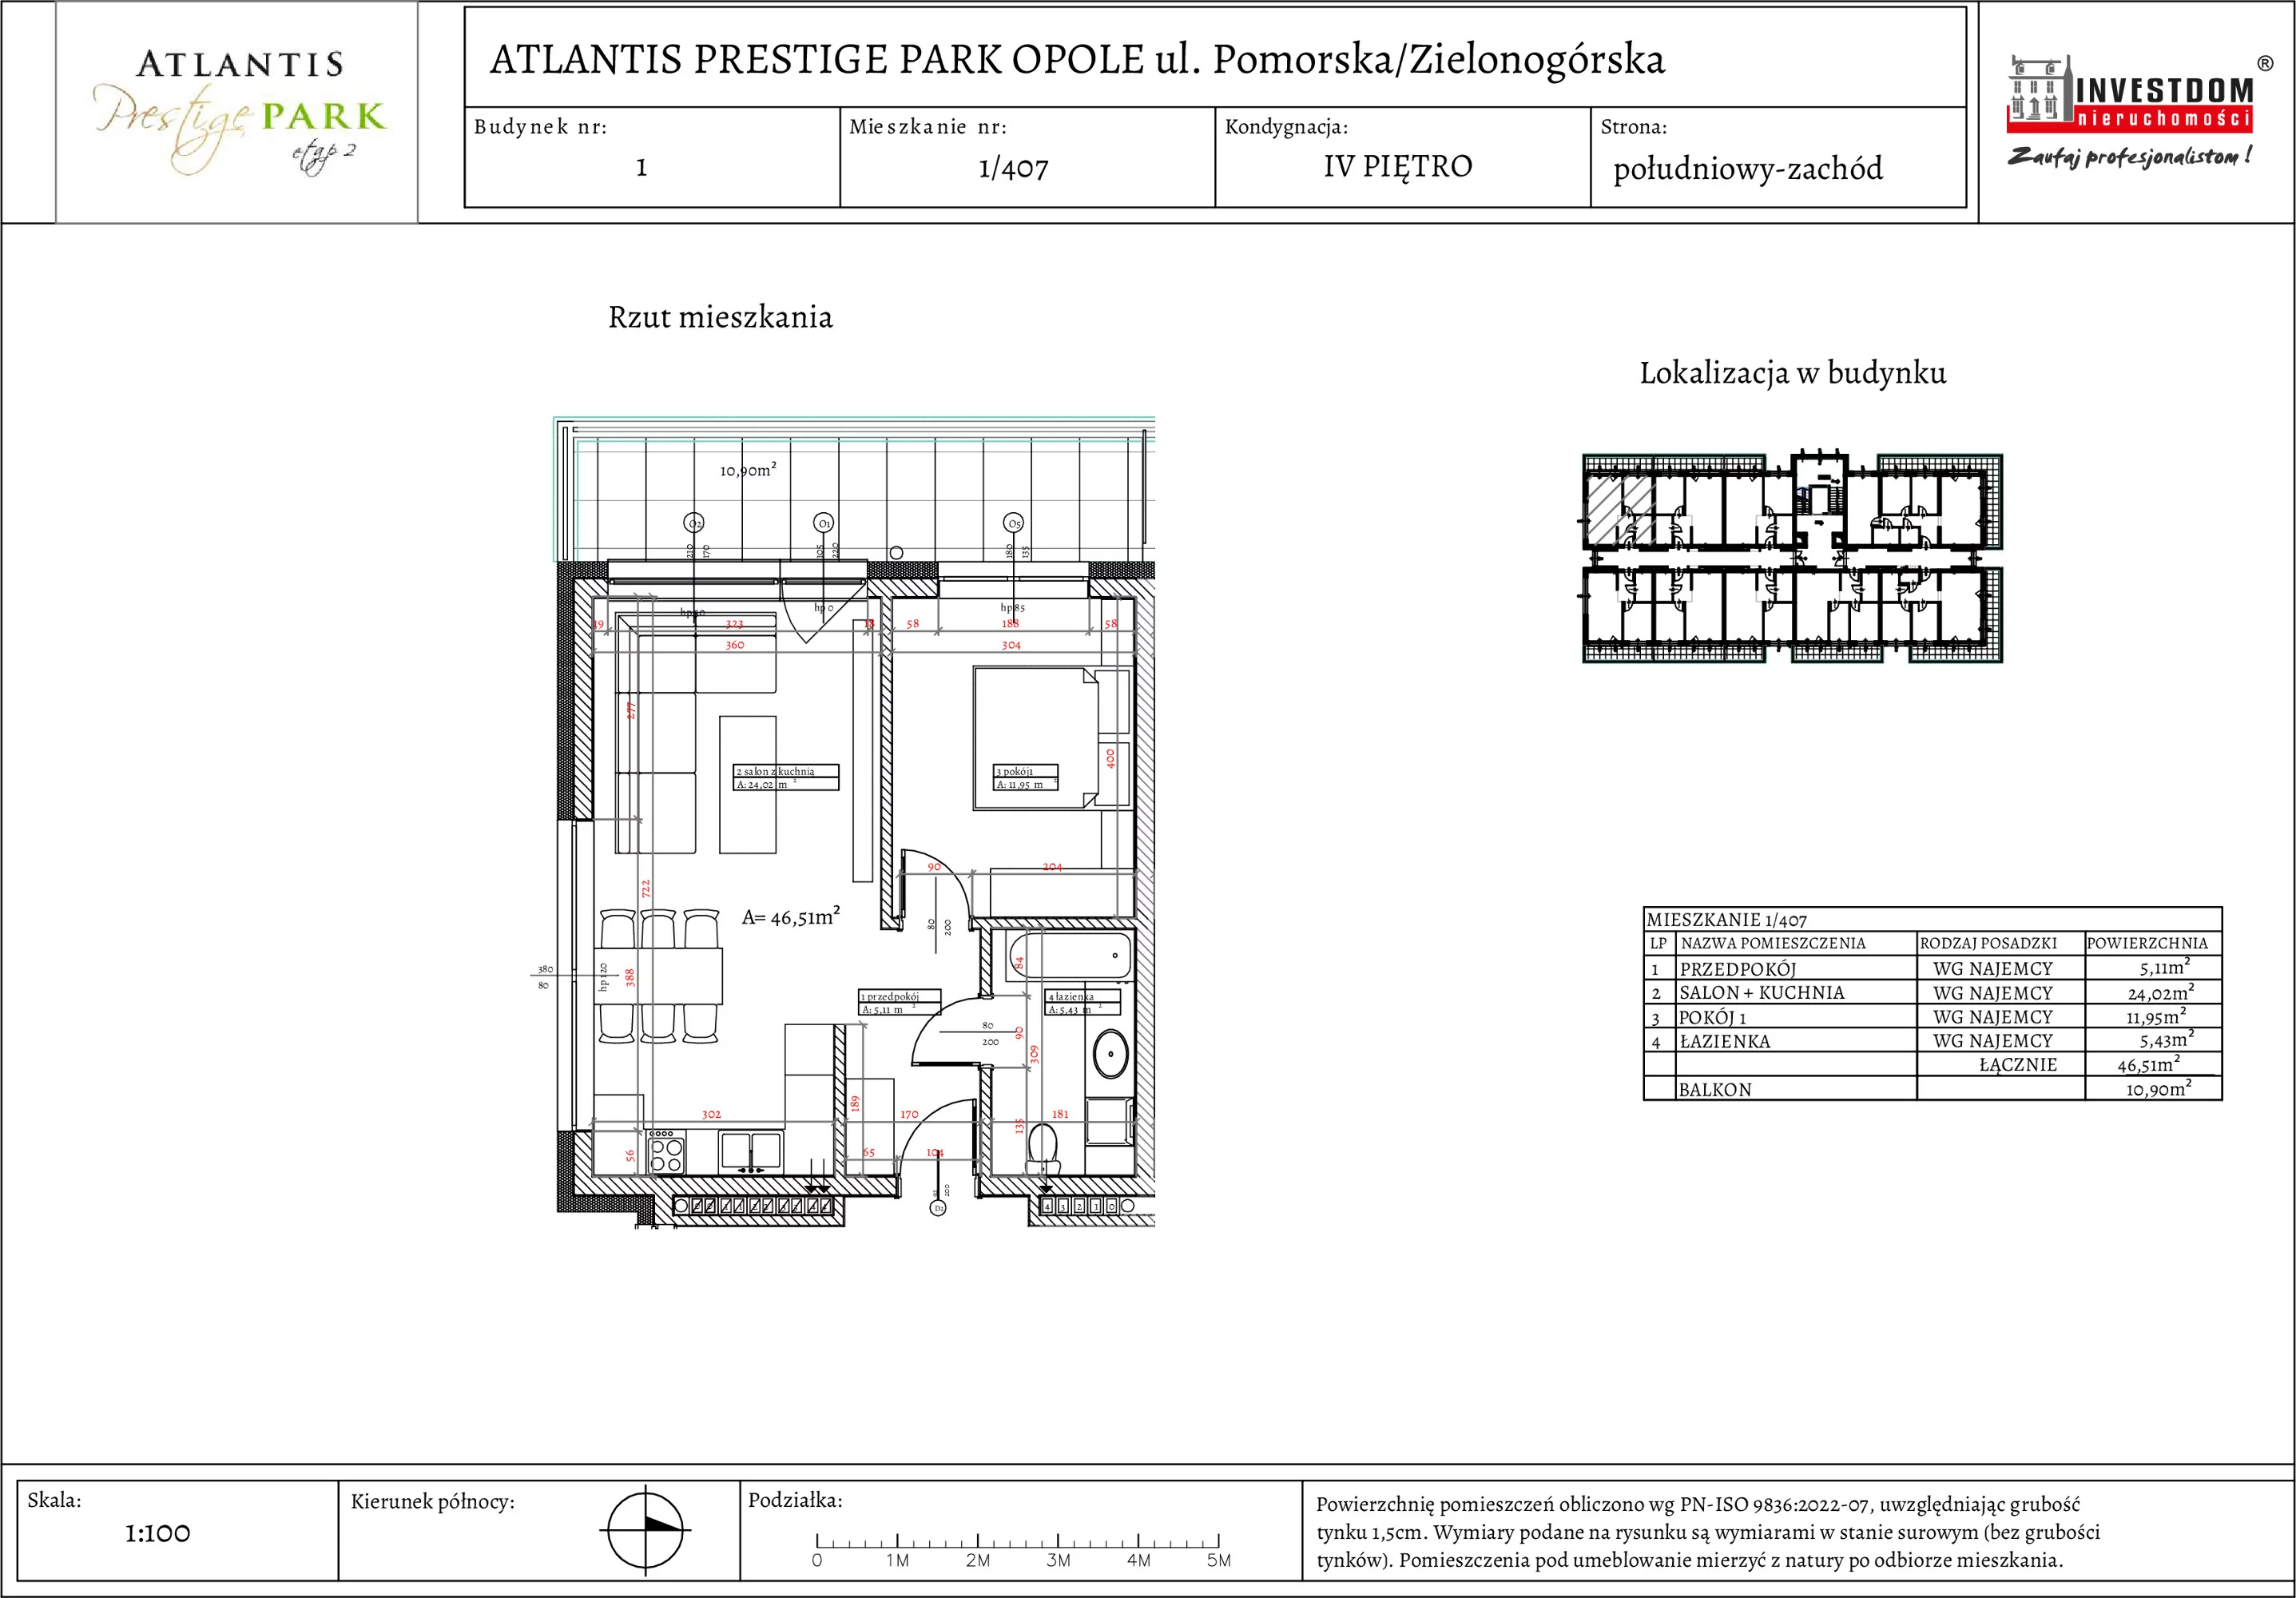 Apartament 46,51 m², piętro 4, oferta nr 1/407, Atlantis Prestige Park, Opole, Malinka, ul. Pomorska / Zielonogórska / Harcmistrza Kamińskiego